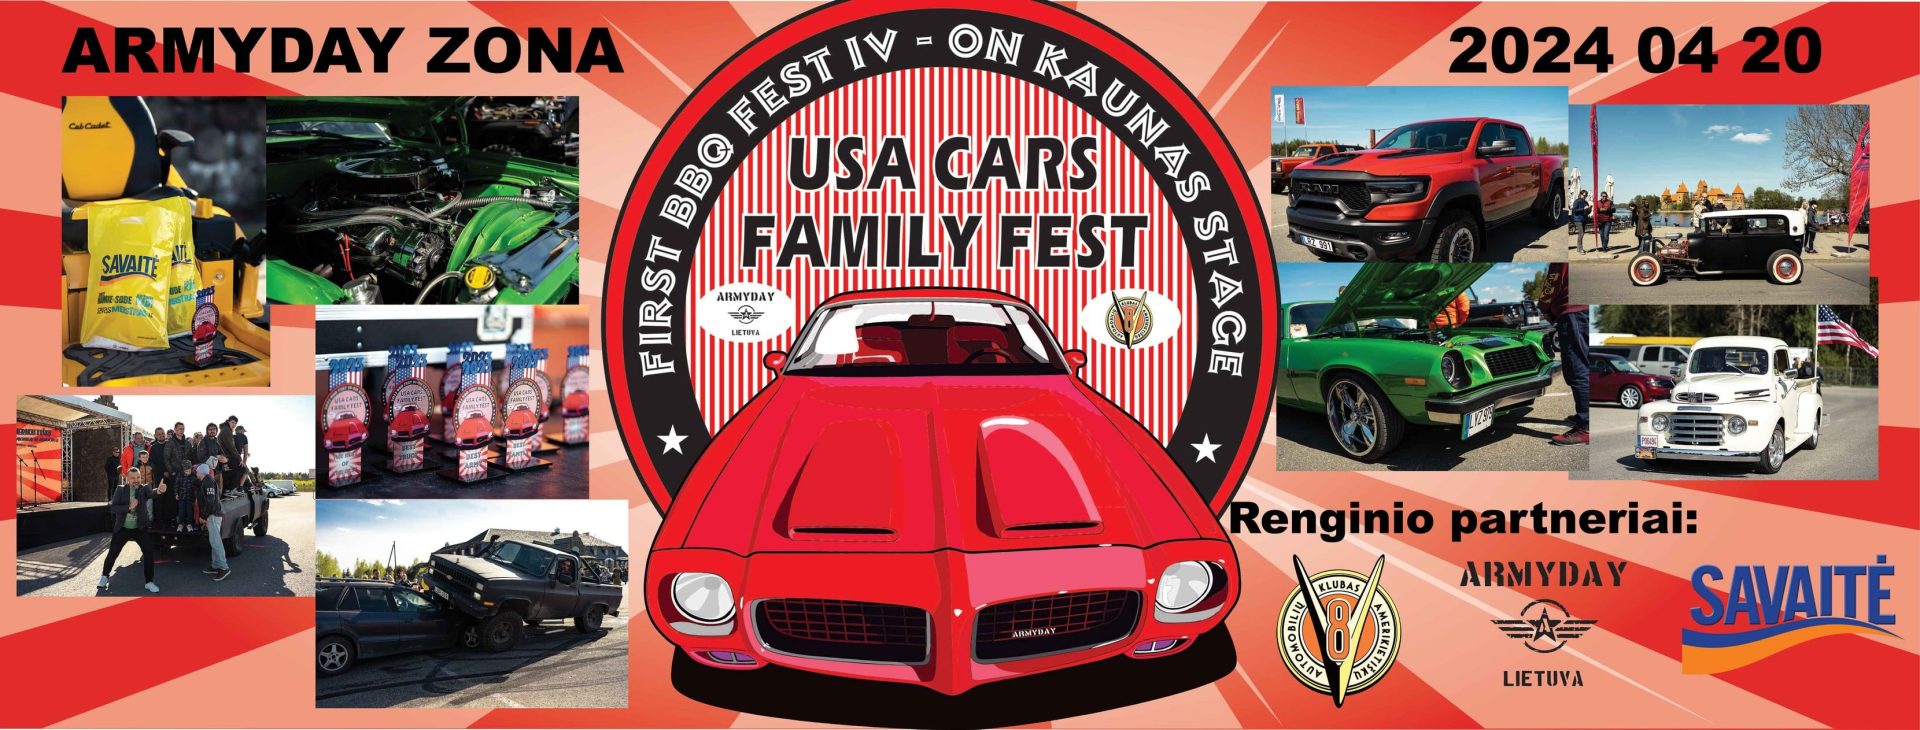 USA CARS FAMILY FEST 2024 BBQ IV-ON Kaunas Stage